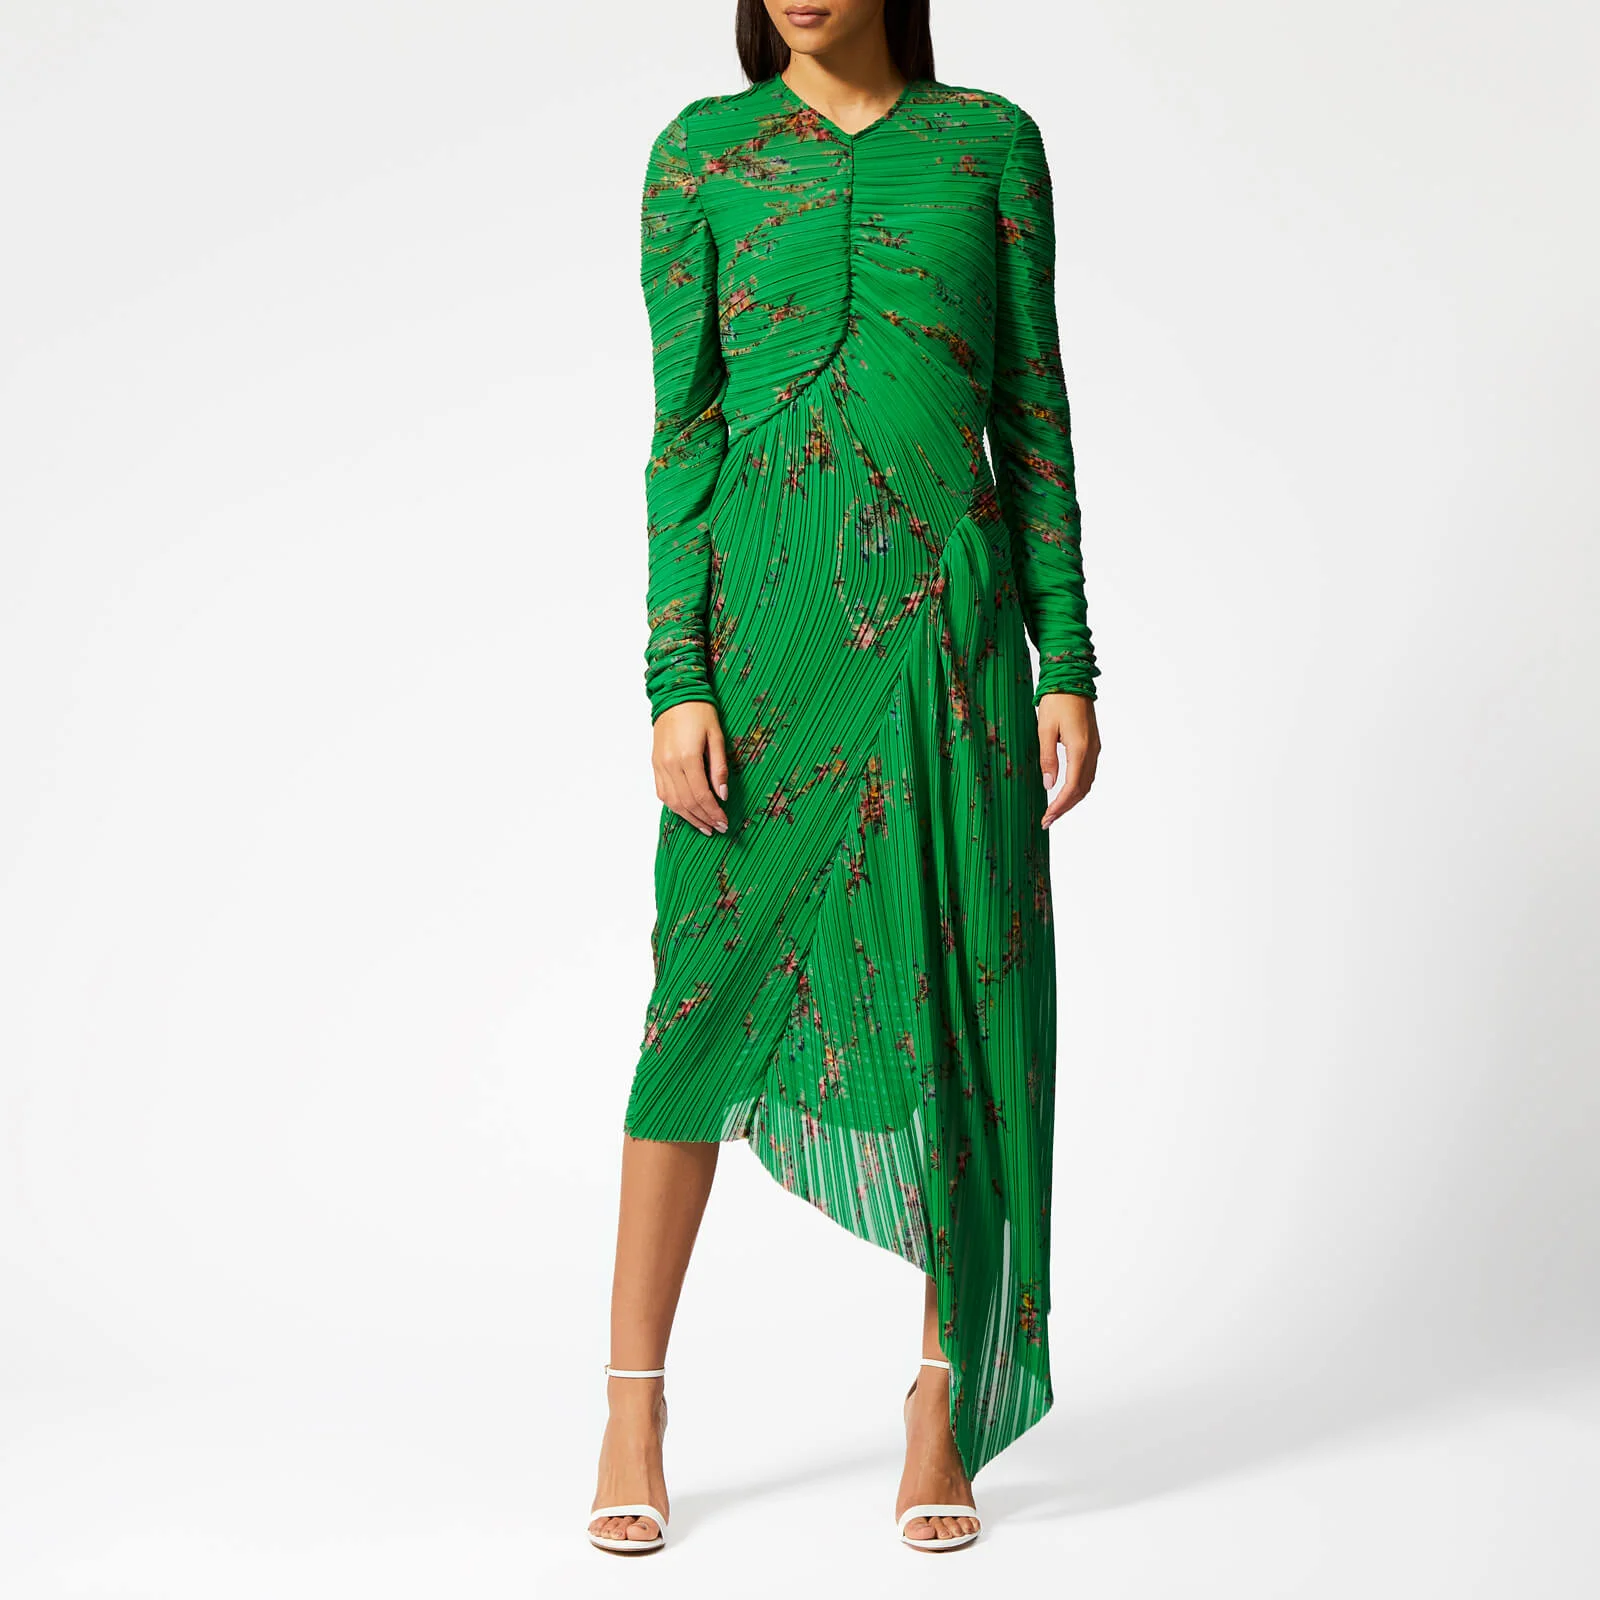 Preen By Thornton Bregazzi Women's Teresa Dress with Green Slip - Emerald Green Image 1